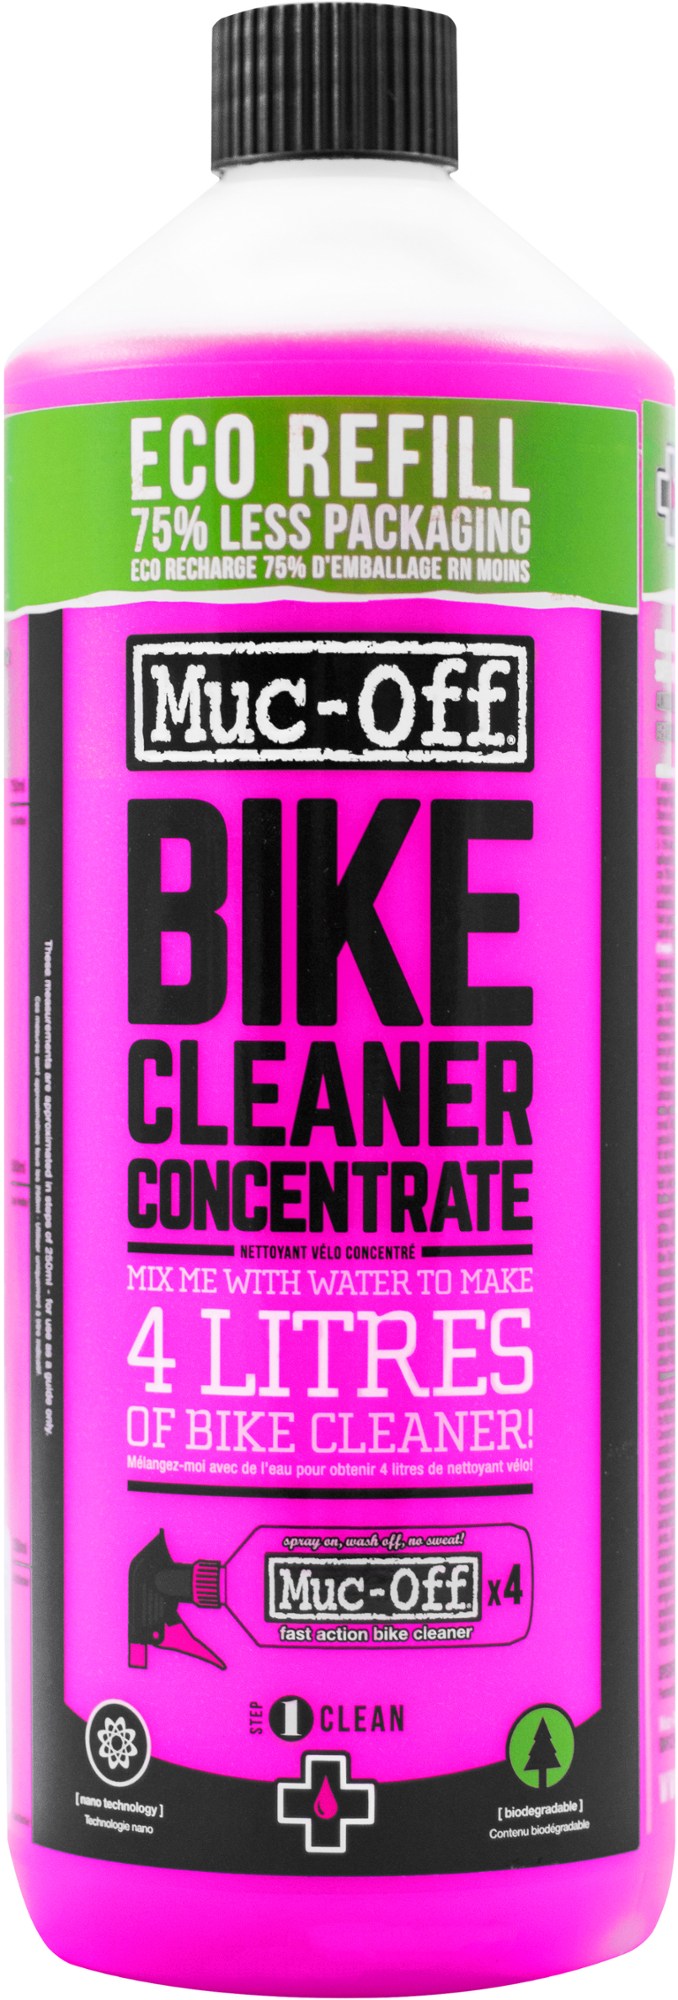 Концентрат для чистки велосипедов Muc-Off очиститель цепи muc off bio chain cleaner 400ml очиститель цепи muc off 2021 bio chain cleaner 400ml 950cee